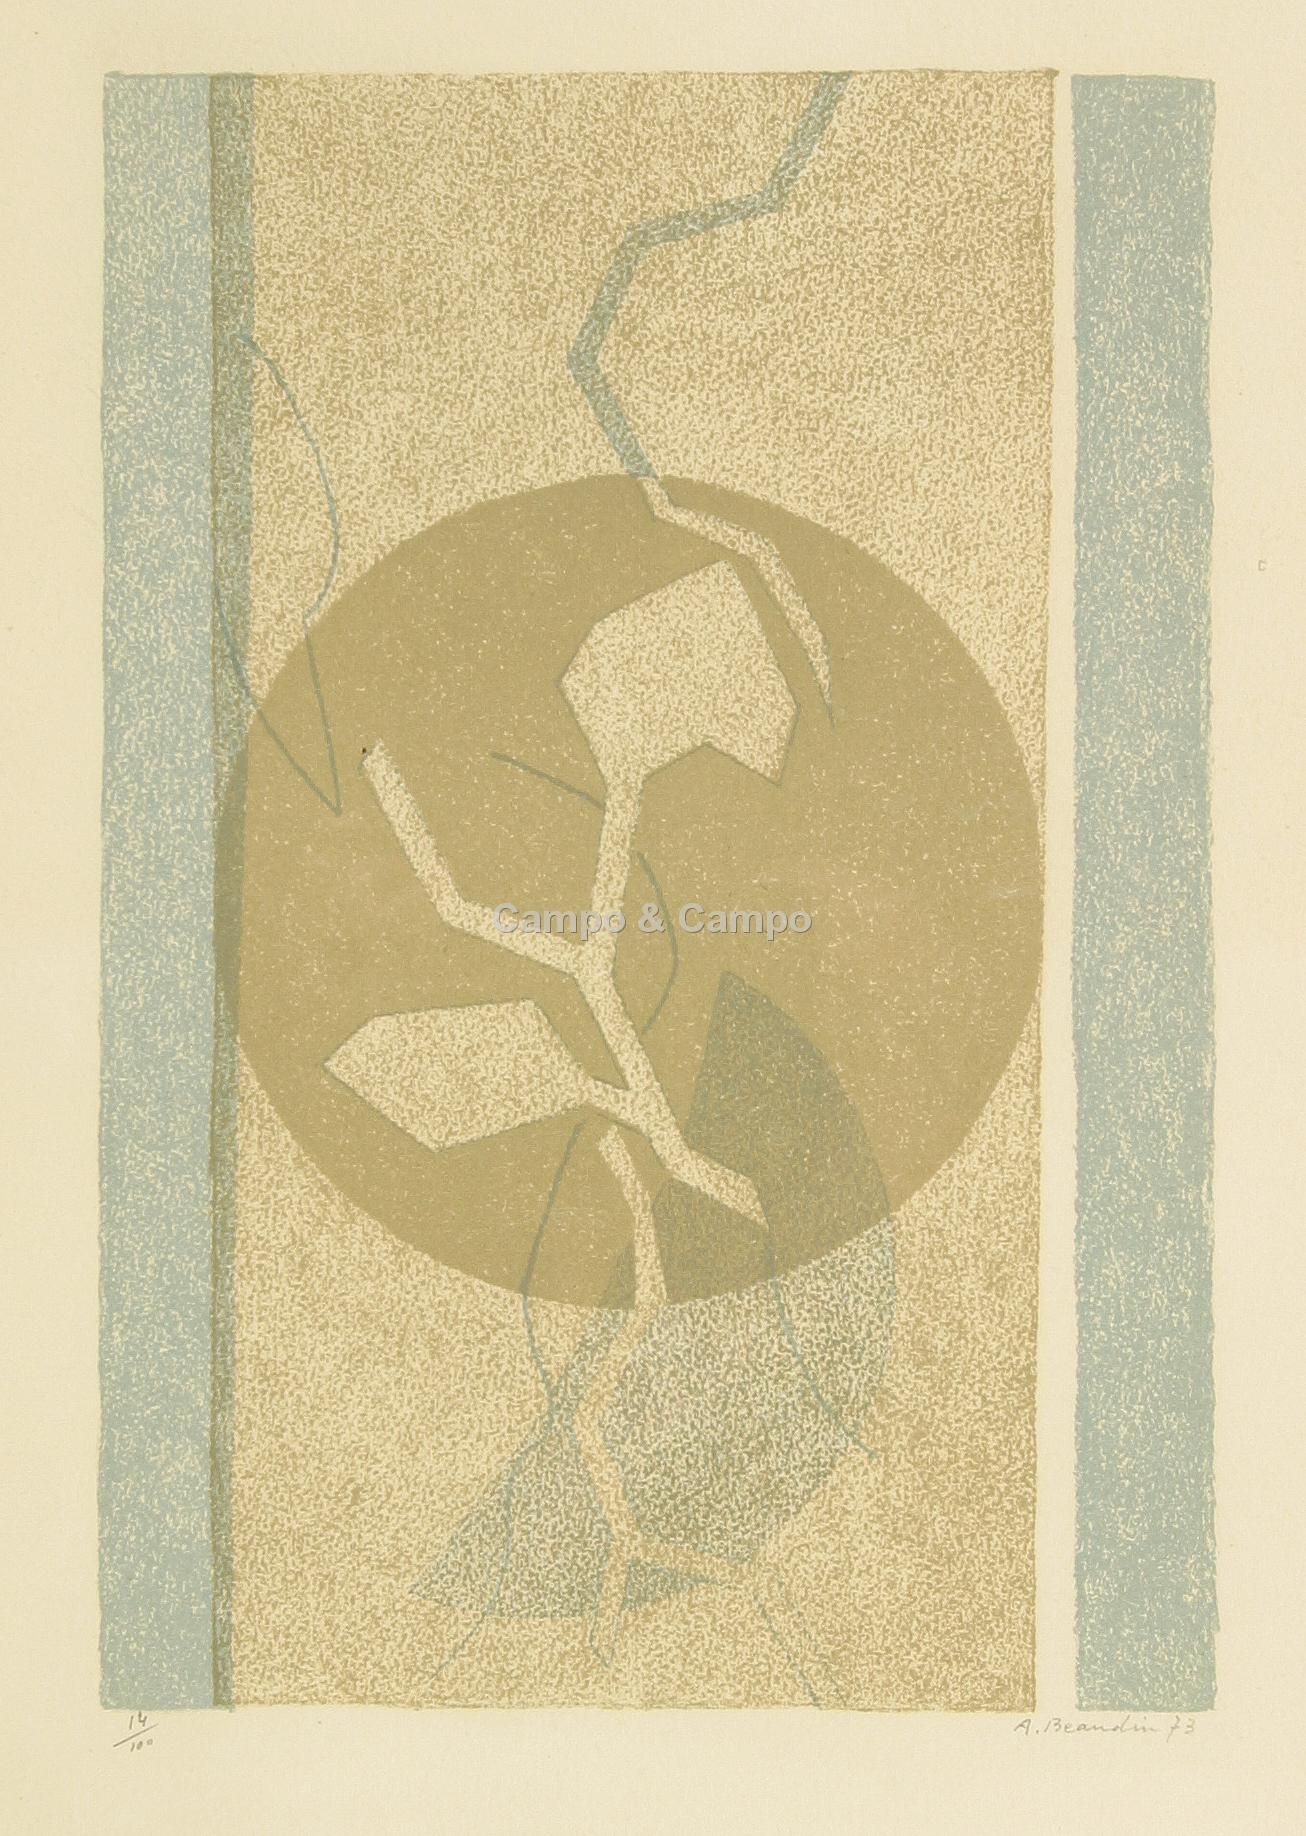 BEAUDIN ANDRE GUSTAVE 1895-1980 Composition végétale
Compositie met vegetatie
Kl&hellip;